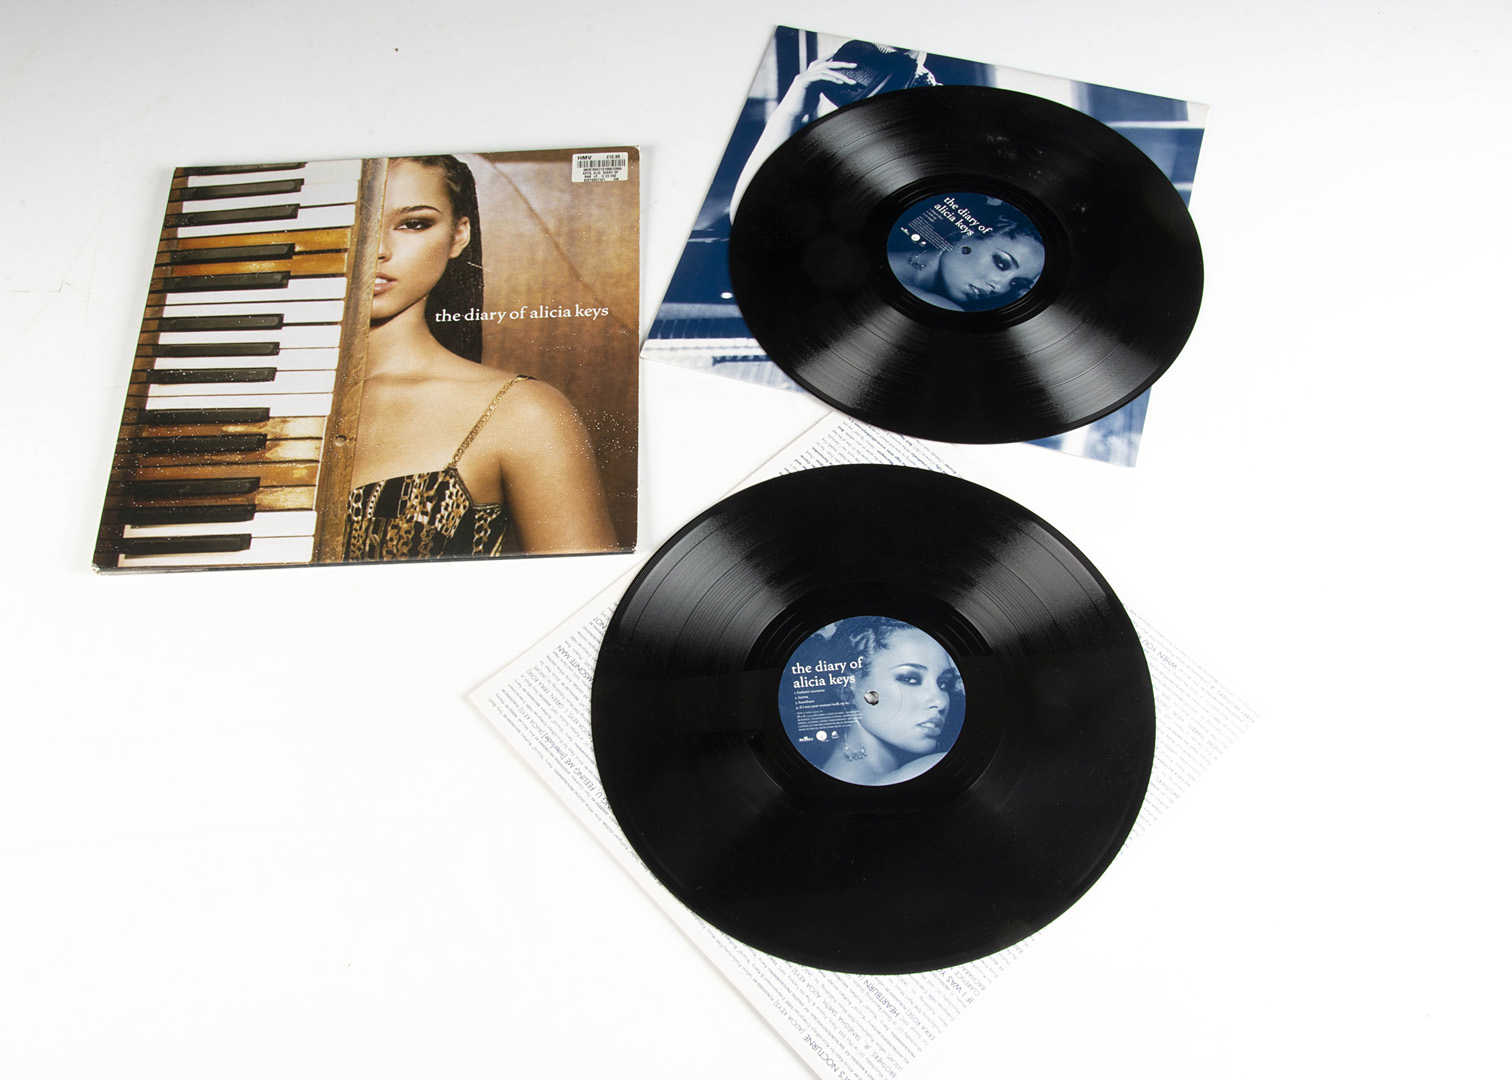 Alicia Keys LP, The Diary Of Alicia Keys Double LP - Original UK Release 2003 on J Records (